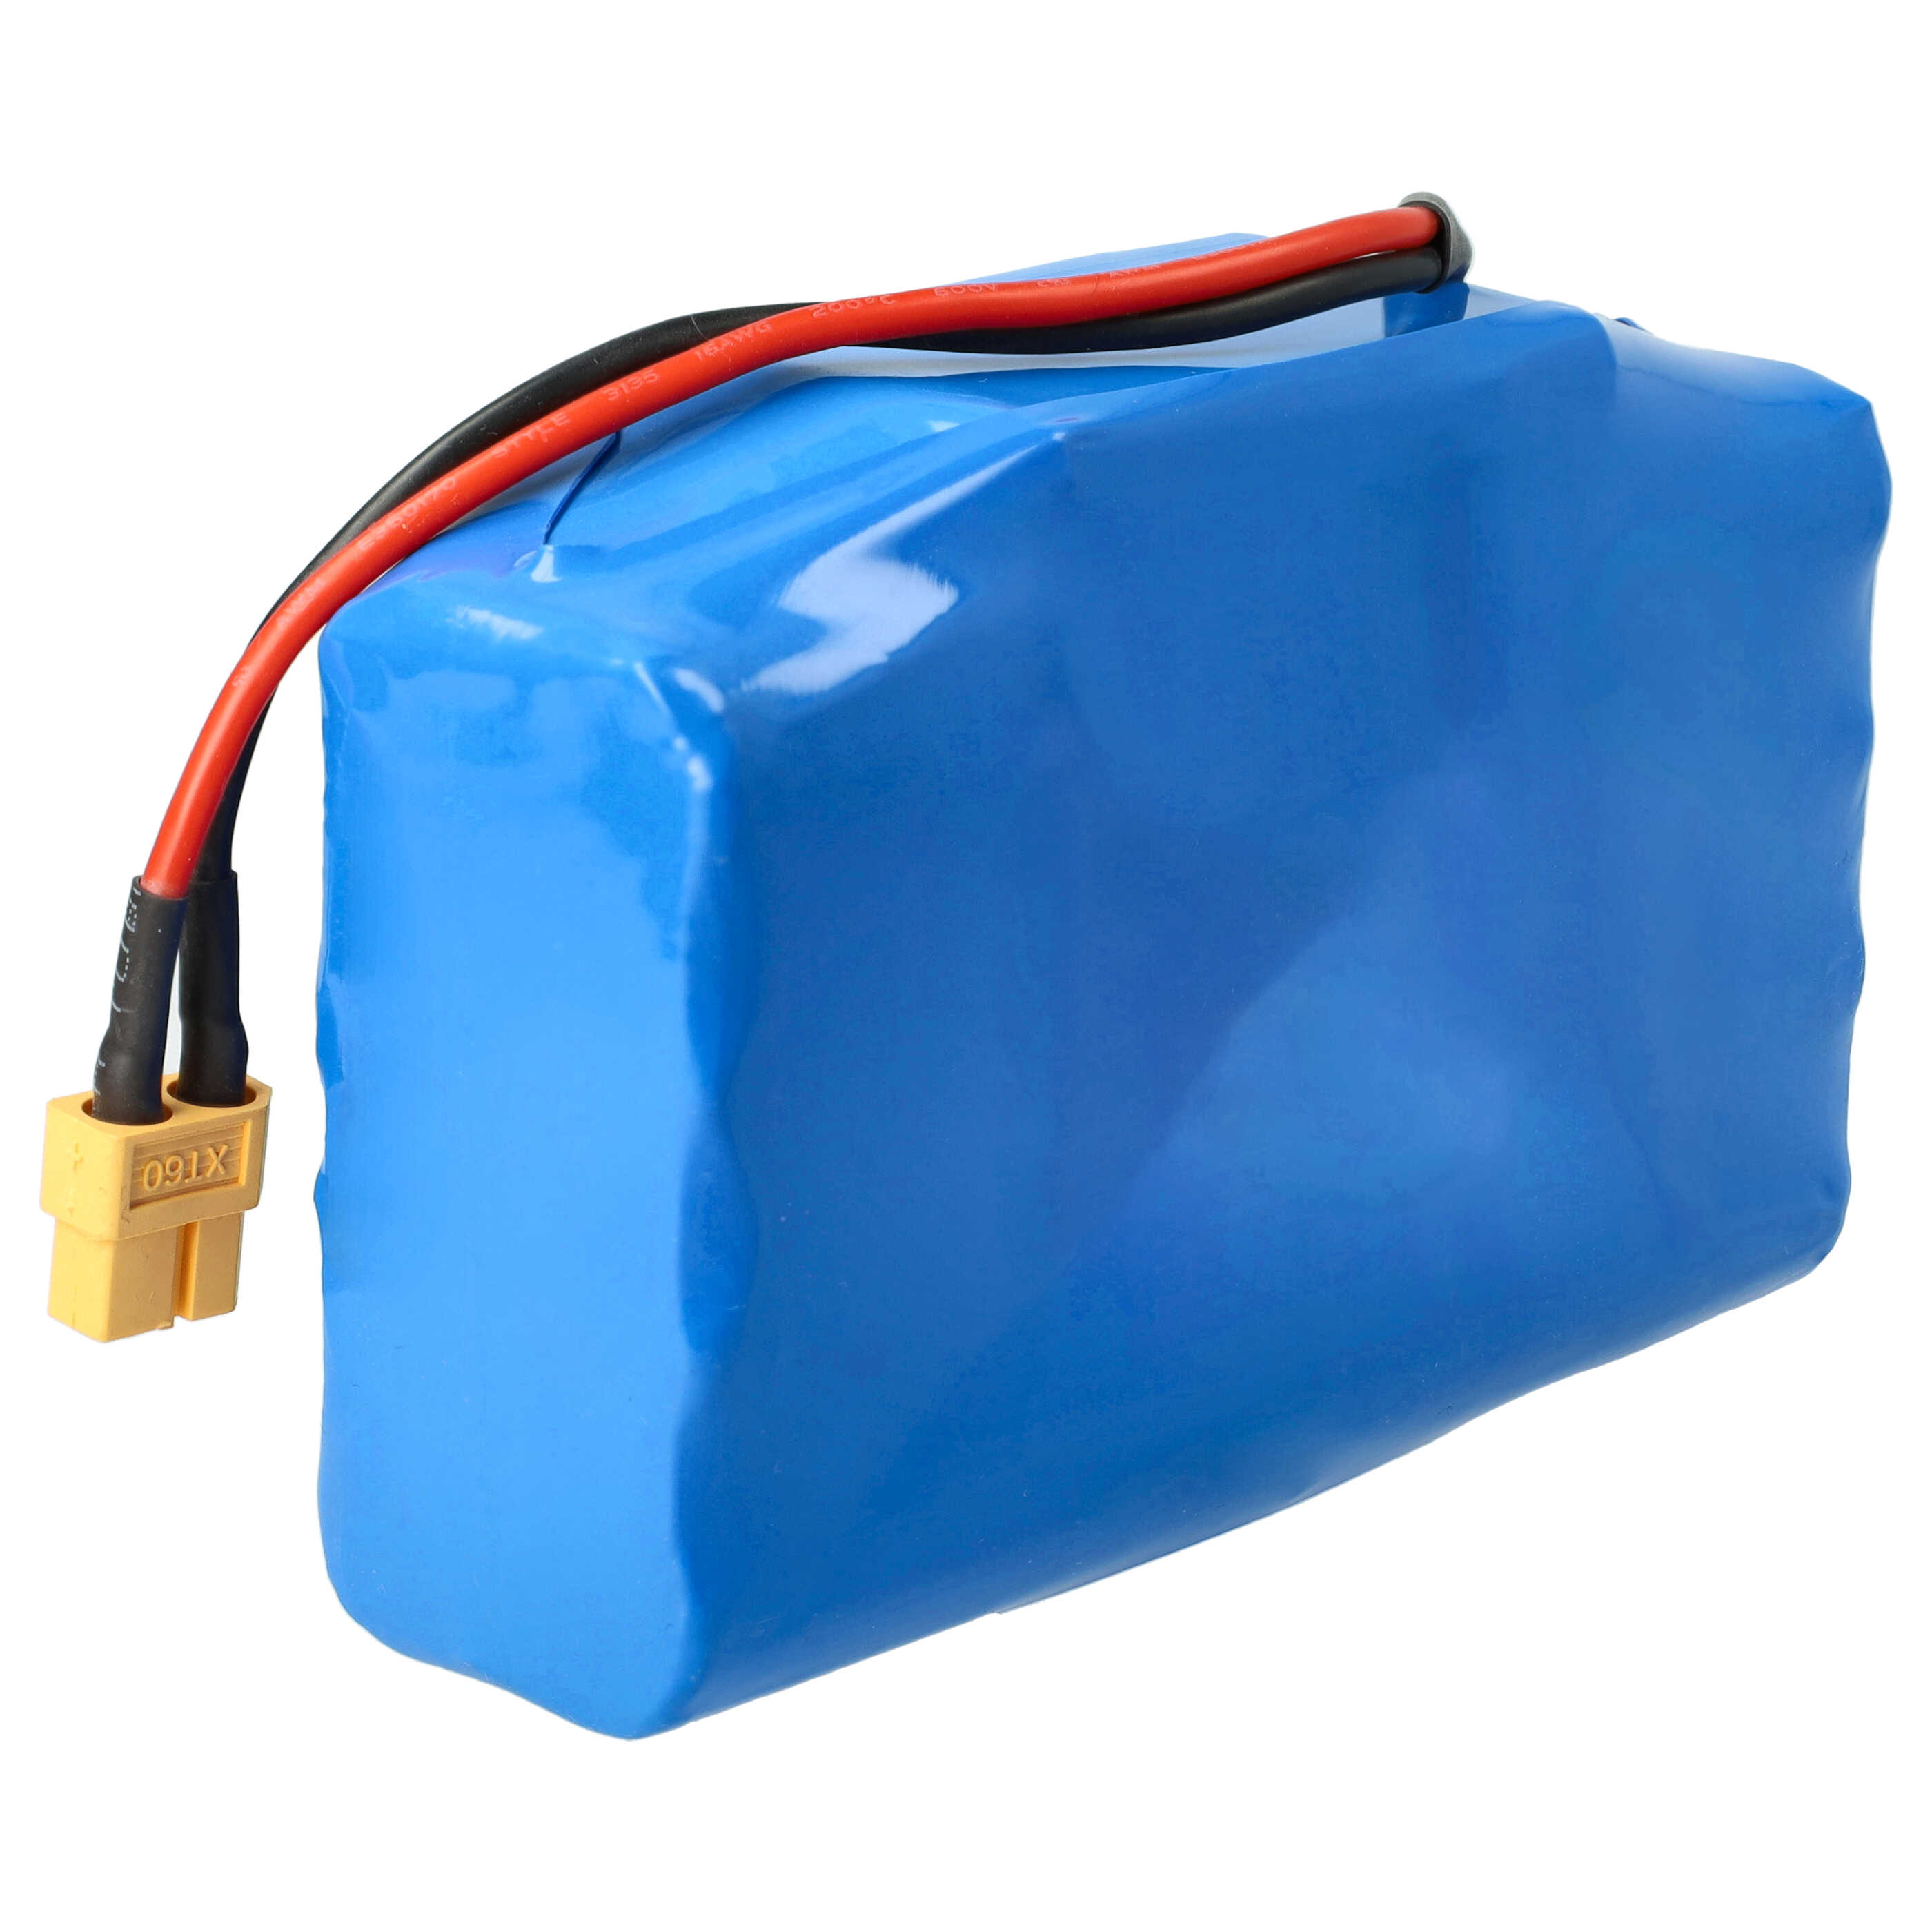 Akumulator do hoverboard zam. Bluewheel 10IXR19/65-2, HPK-11 - 4400 mAh 36 V Li-Ion